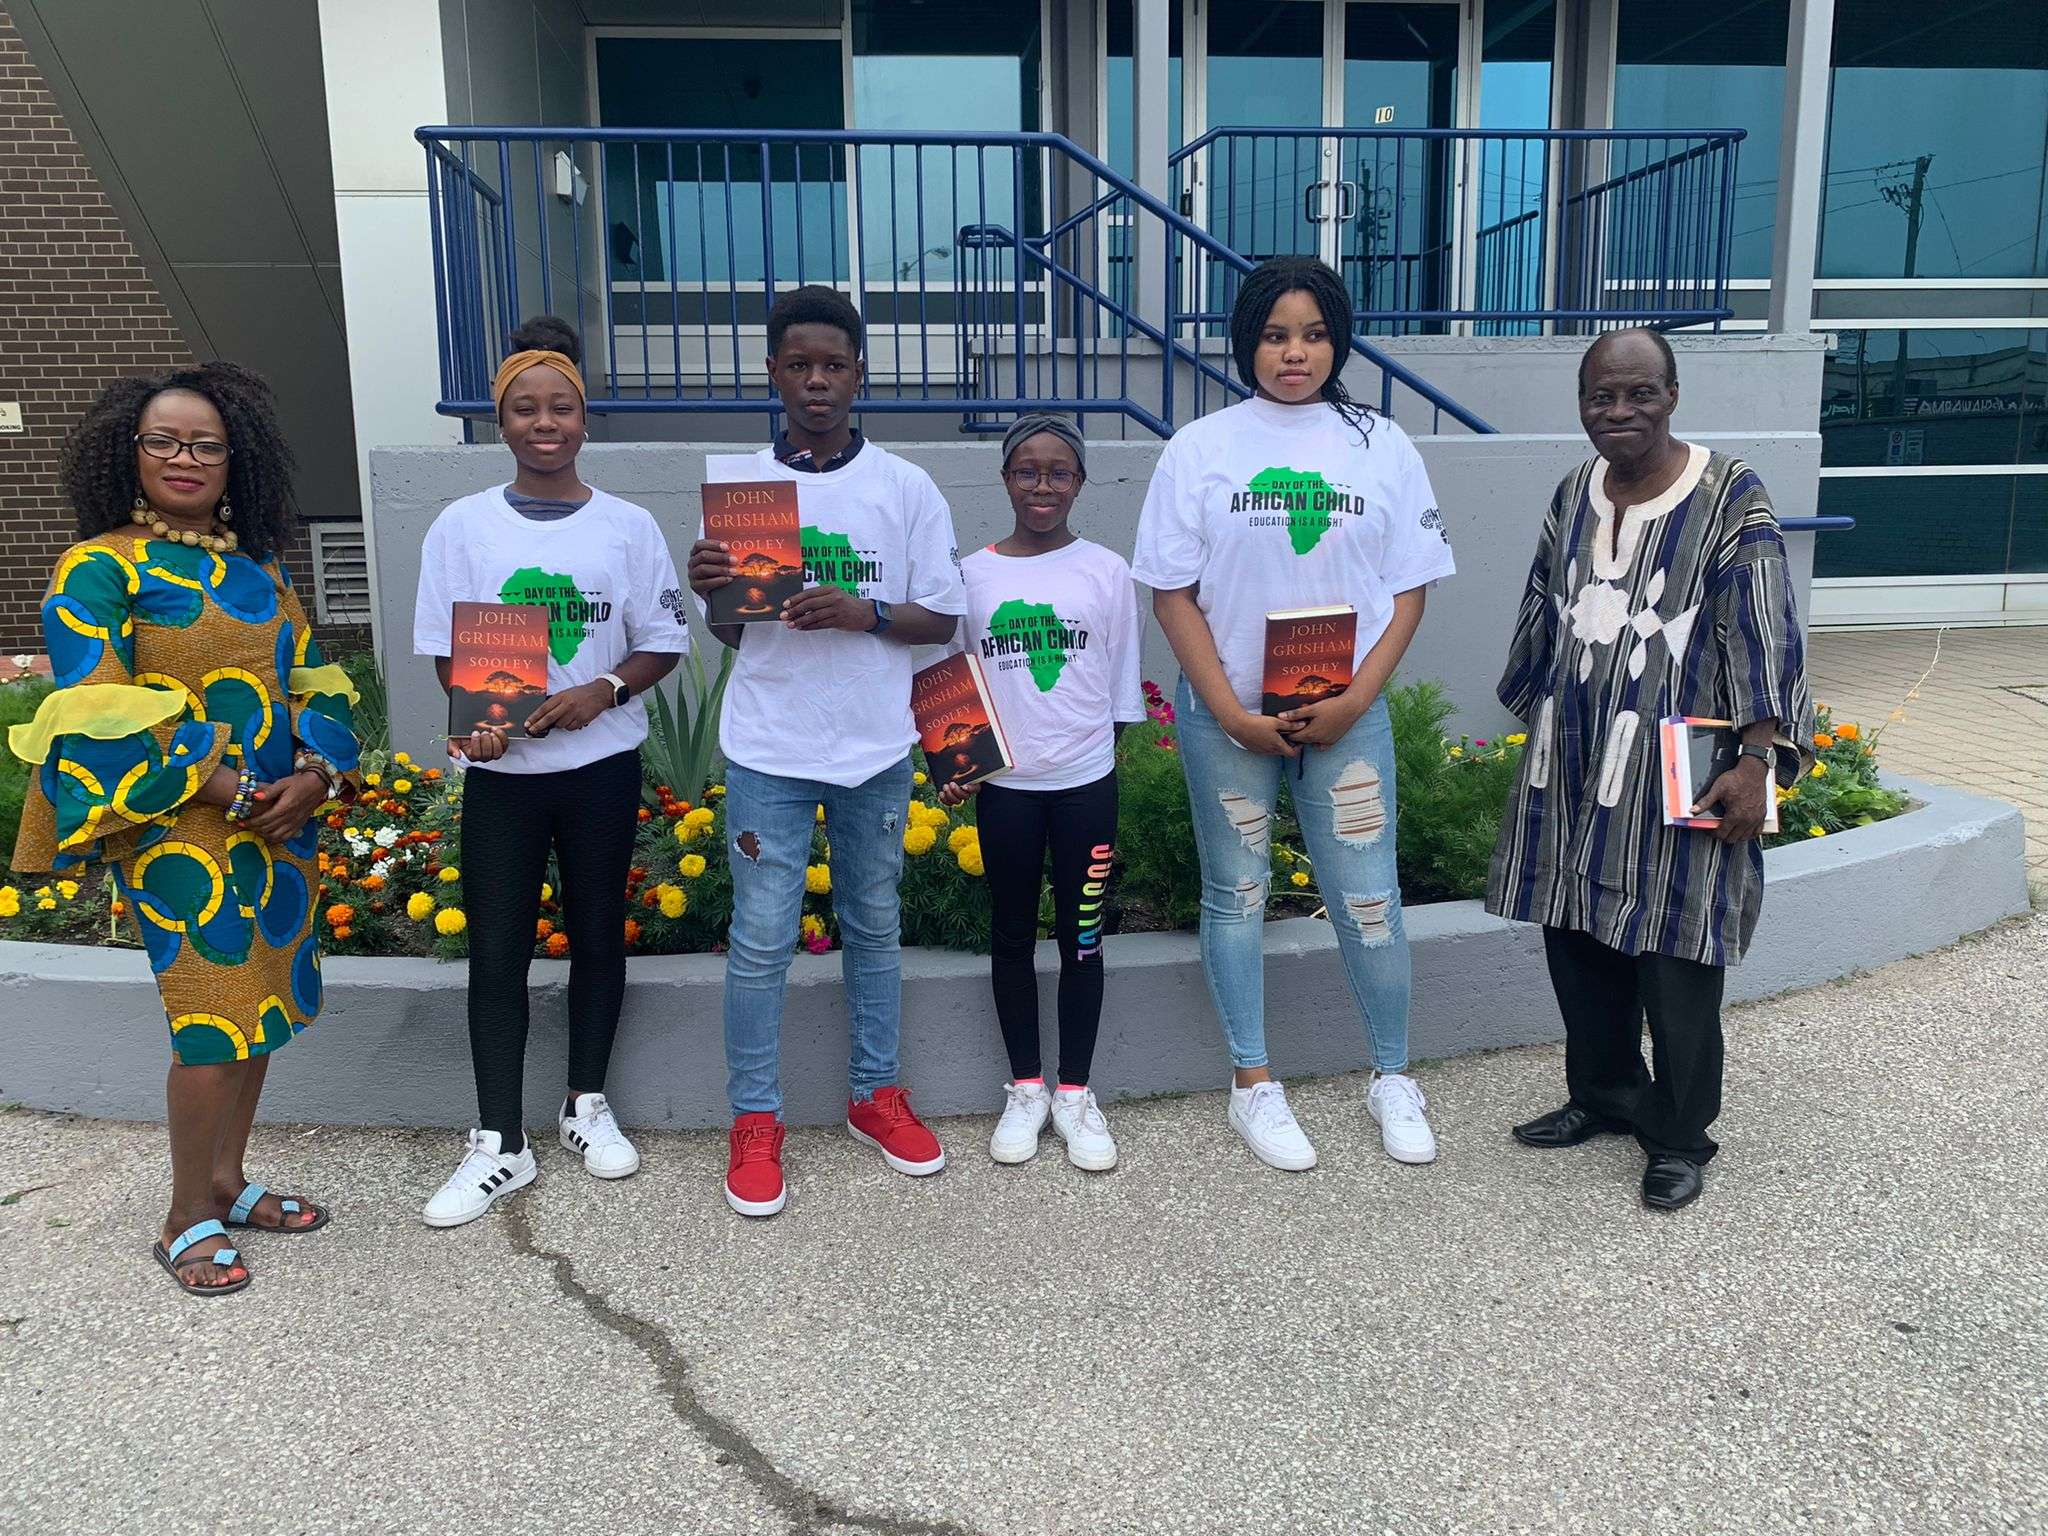 Some GCAO Homework Club students honoured in Toronto by Giants of Africa. By Joe Kingsley Eyiah